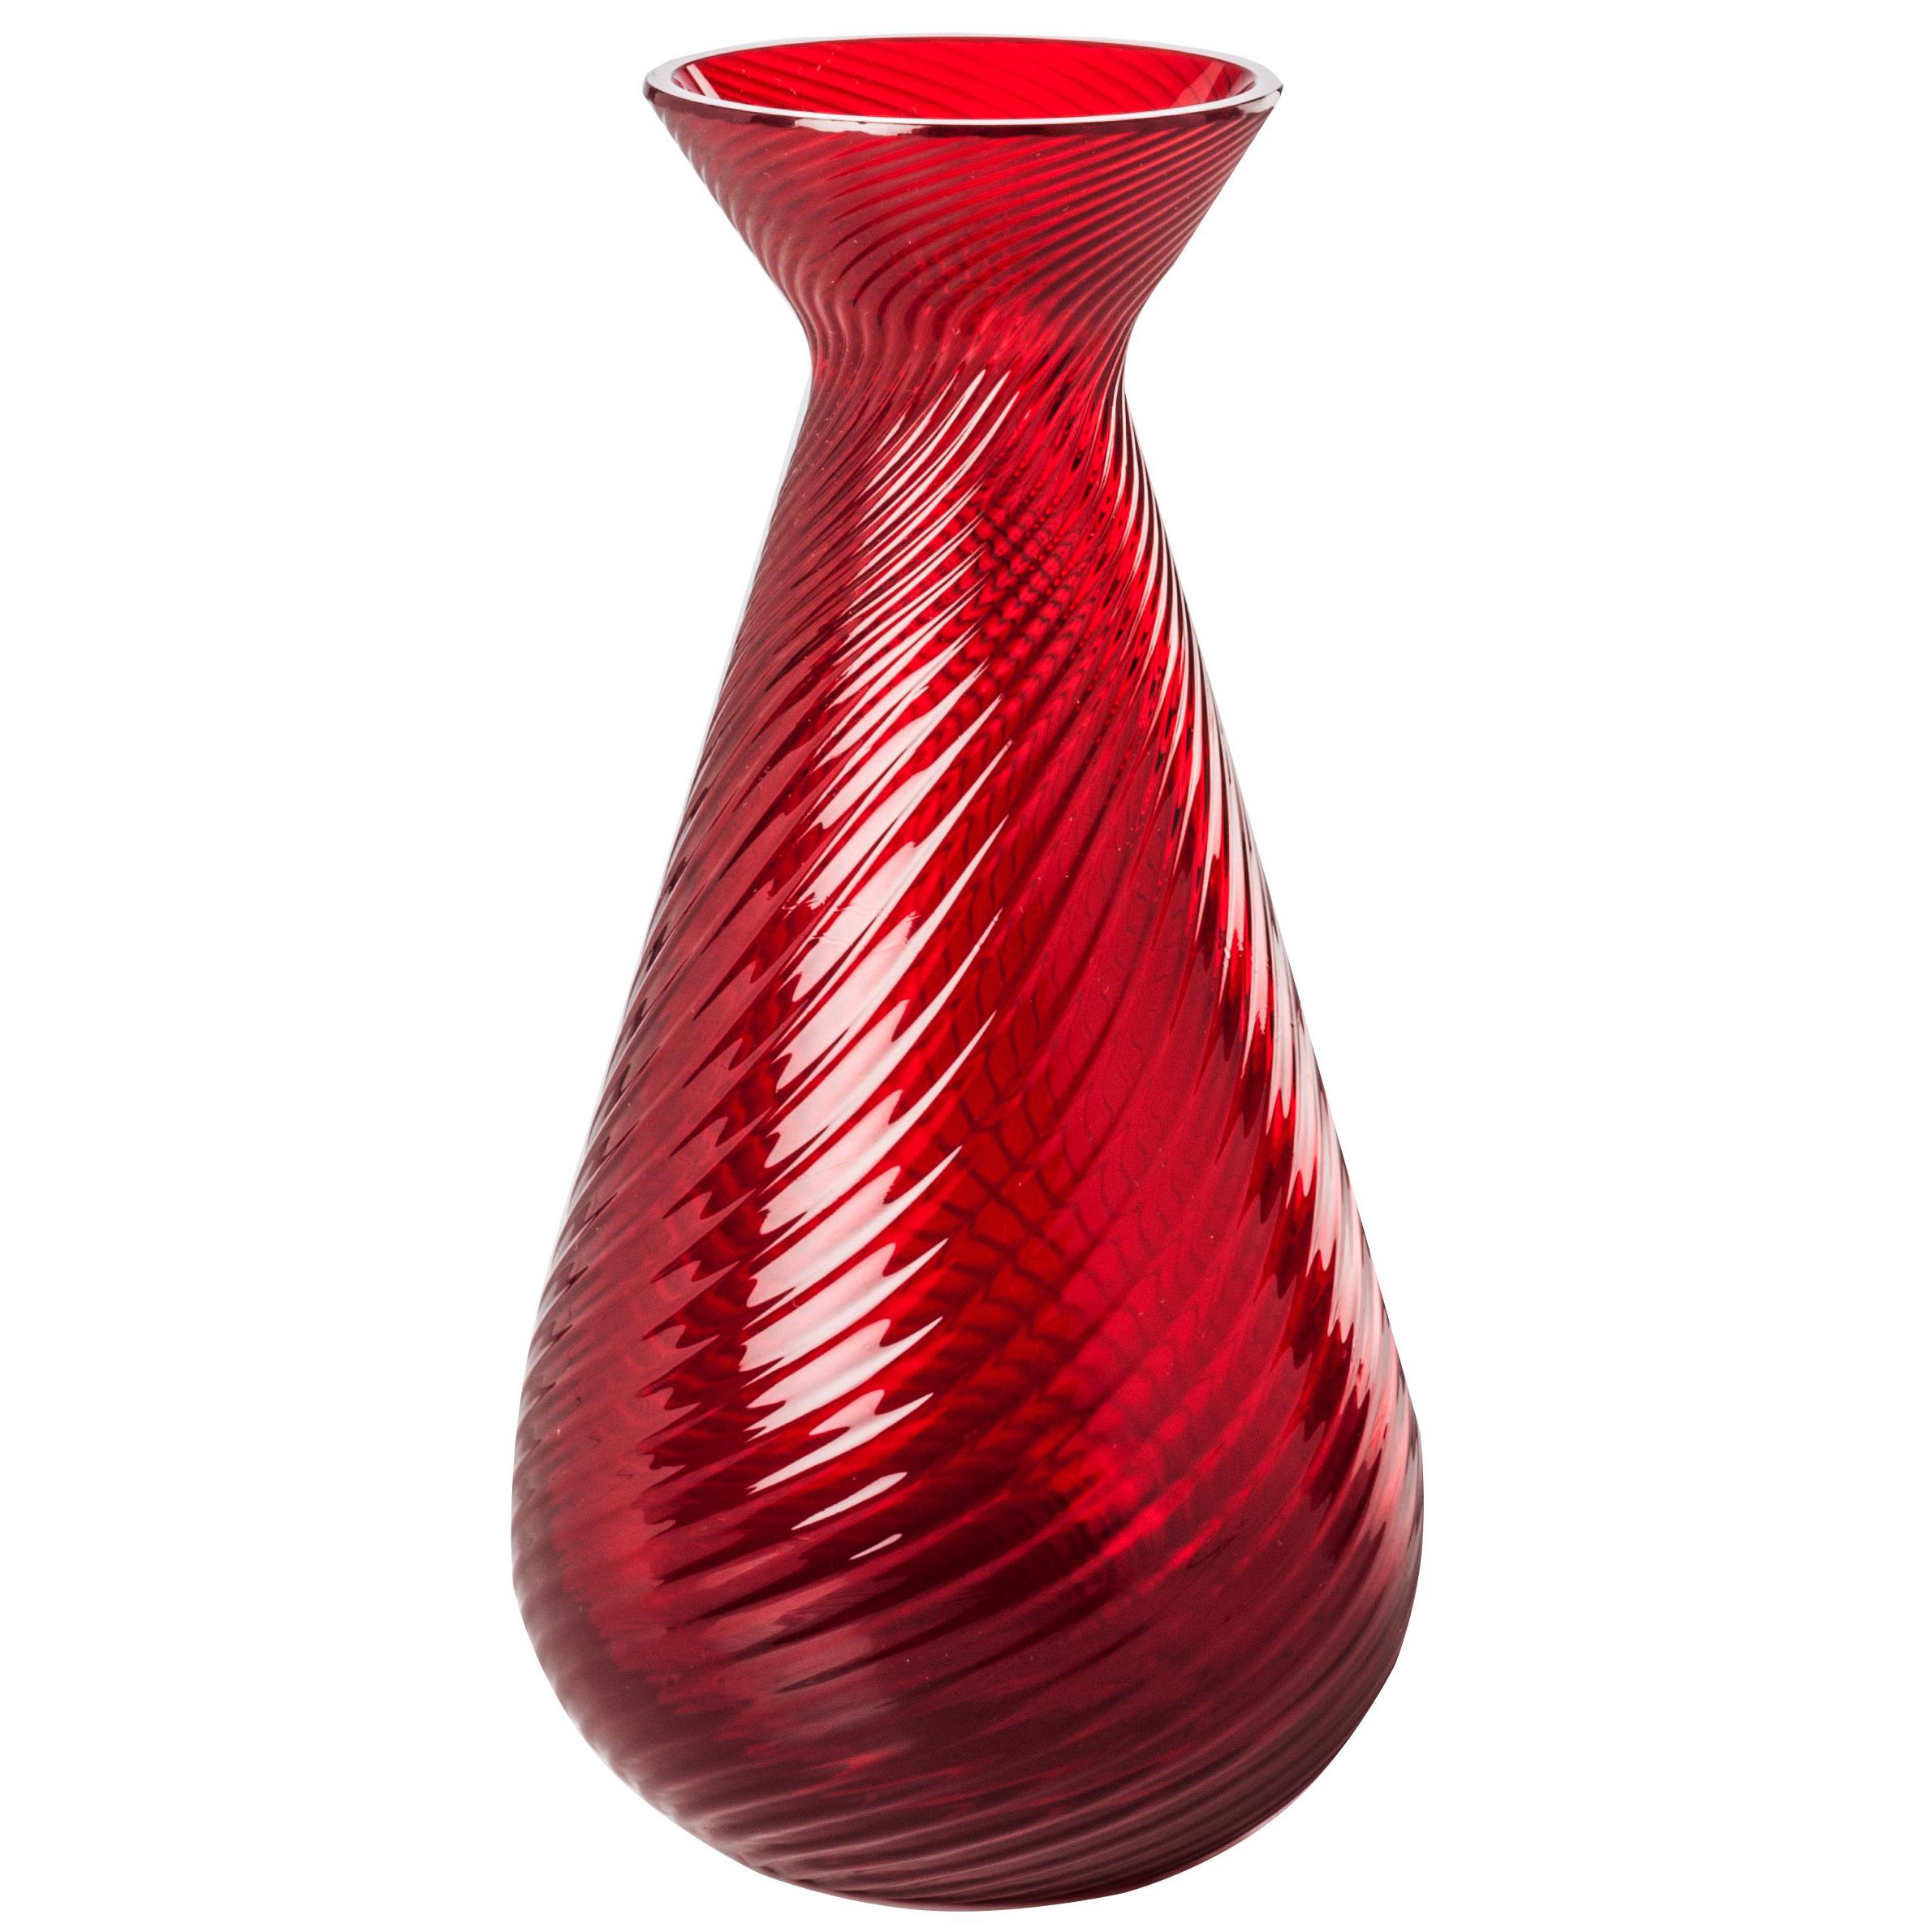 Gemme Triangular Glass Vase in Red by Venini